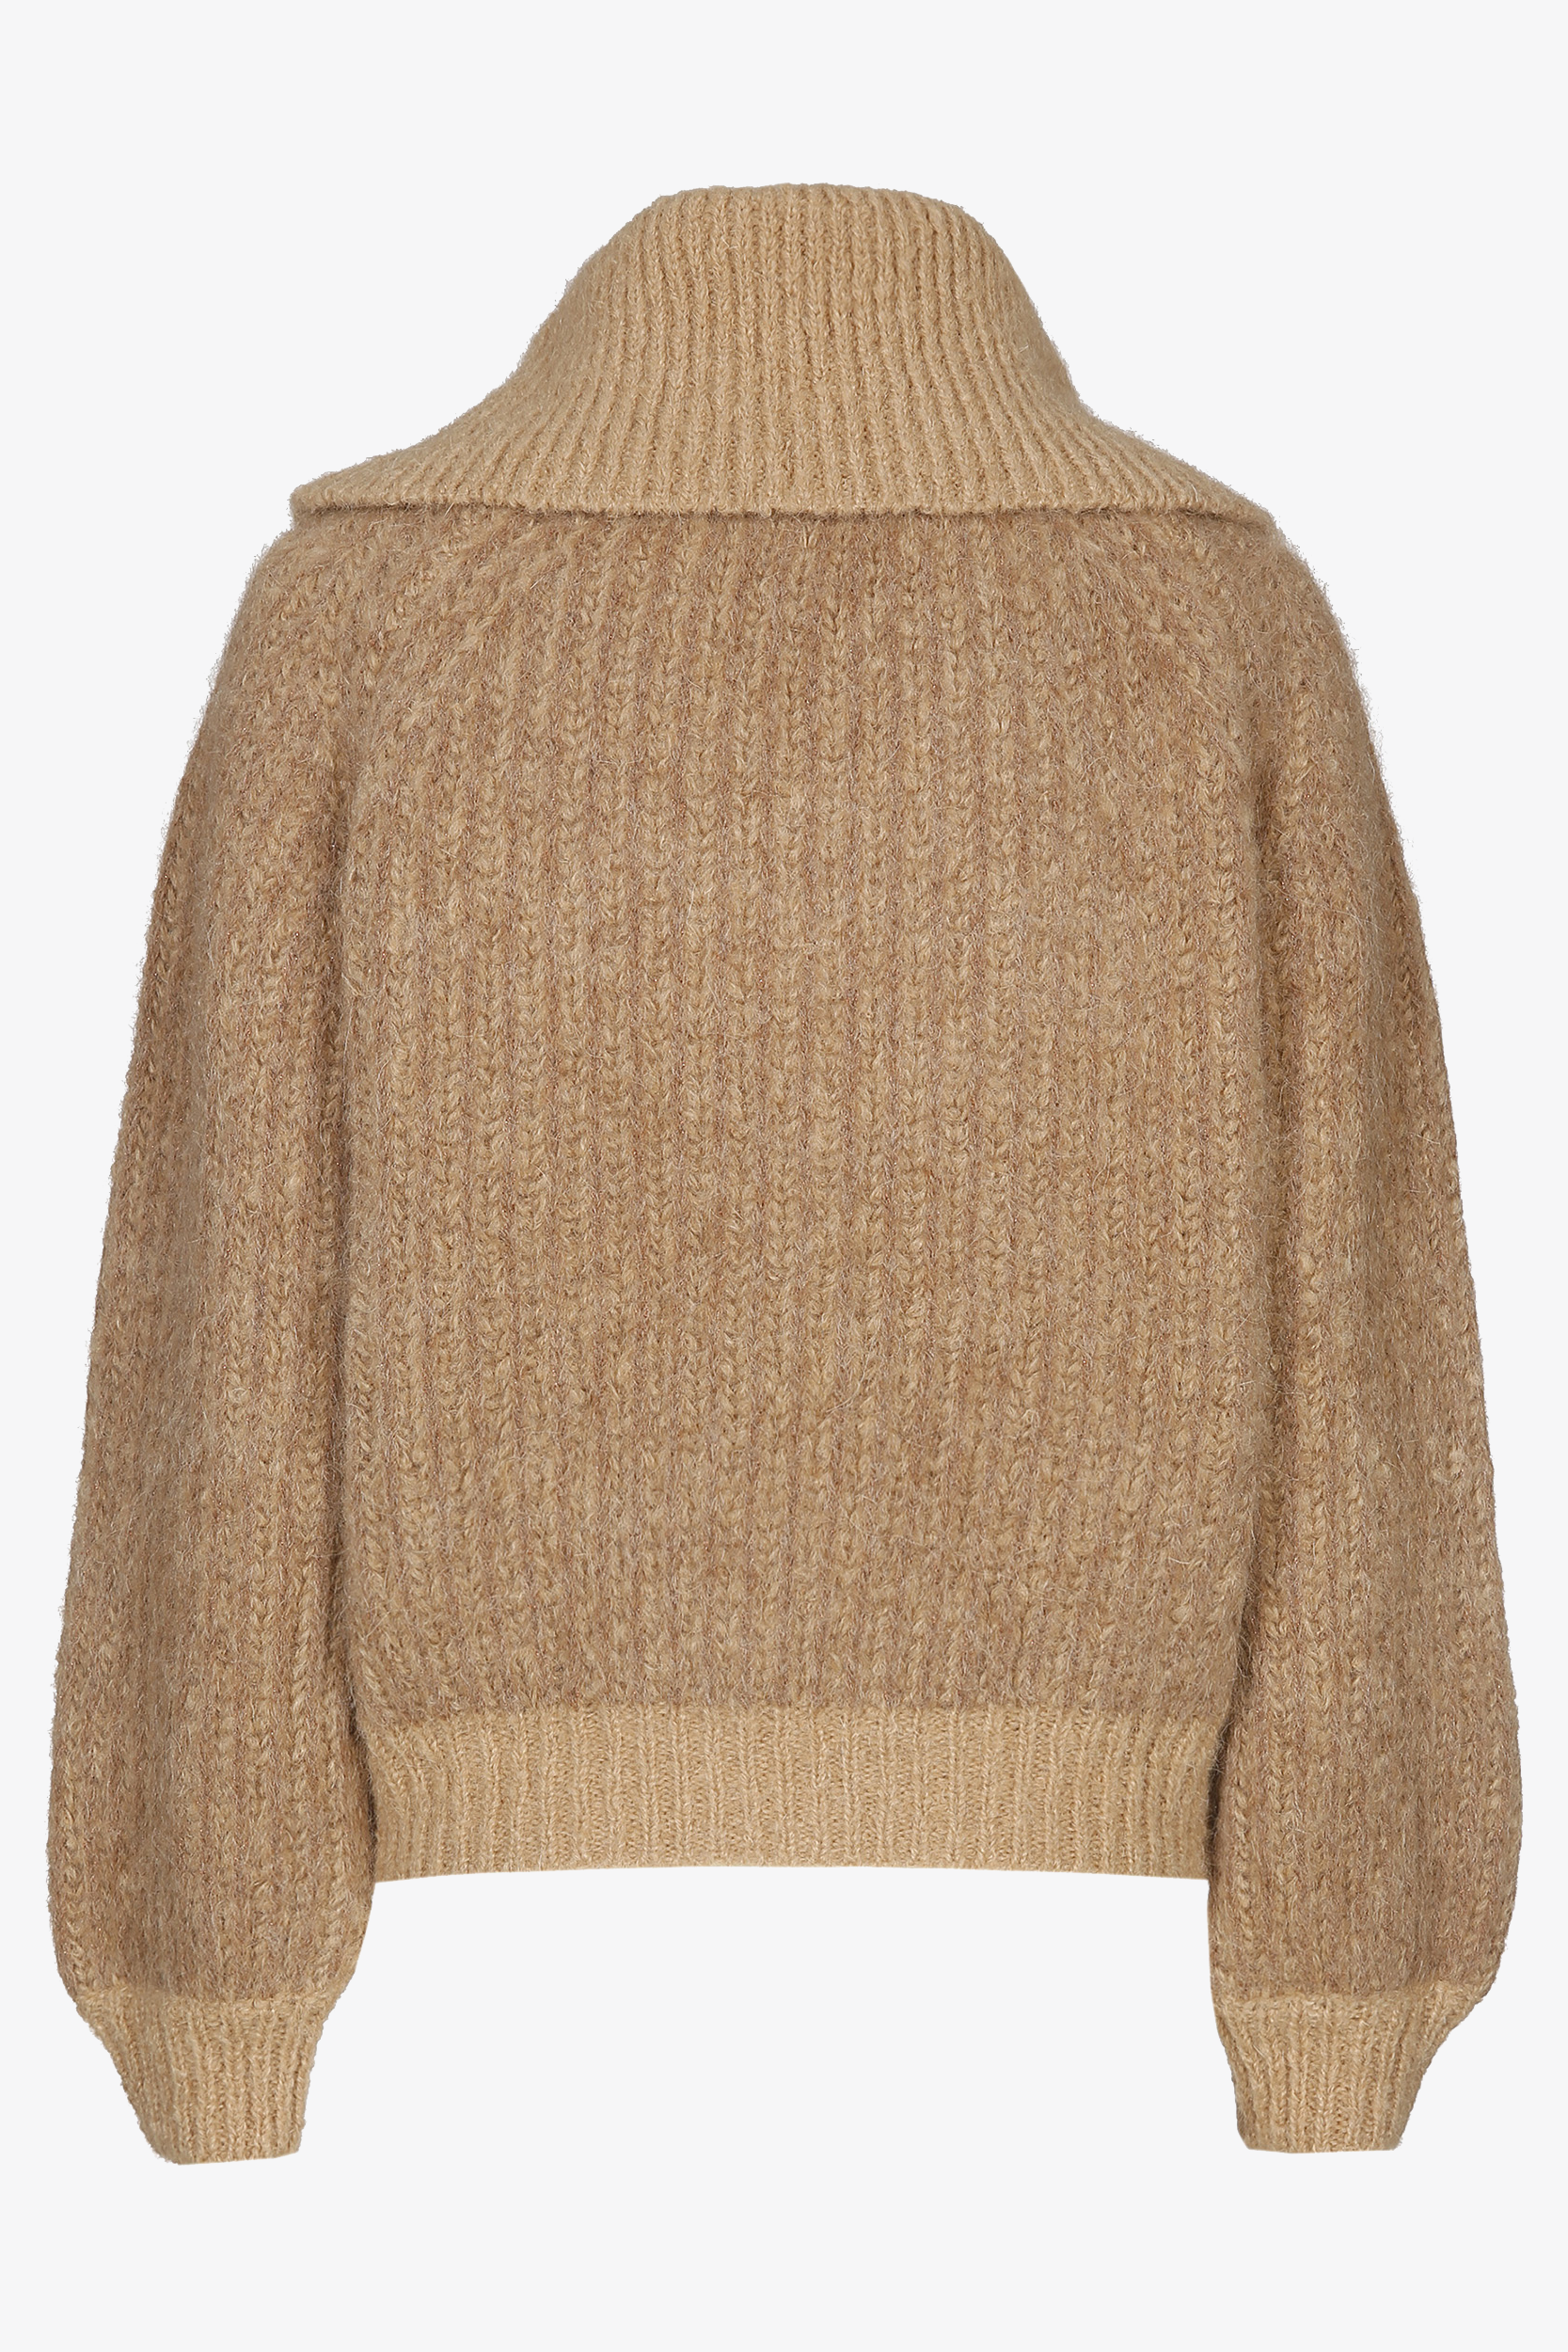 Wool blend collared jumper